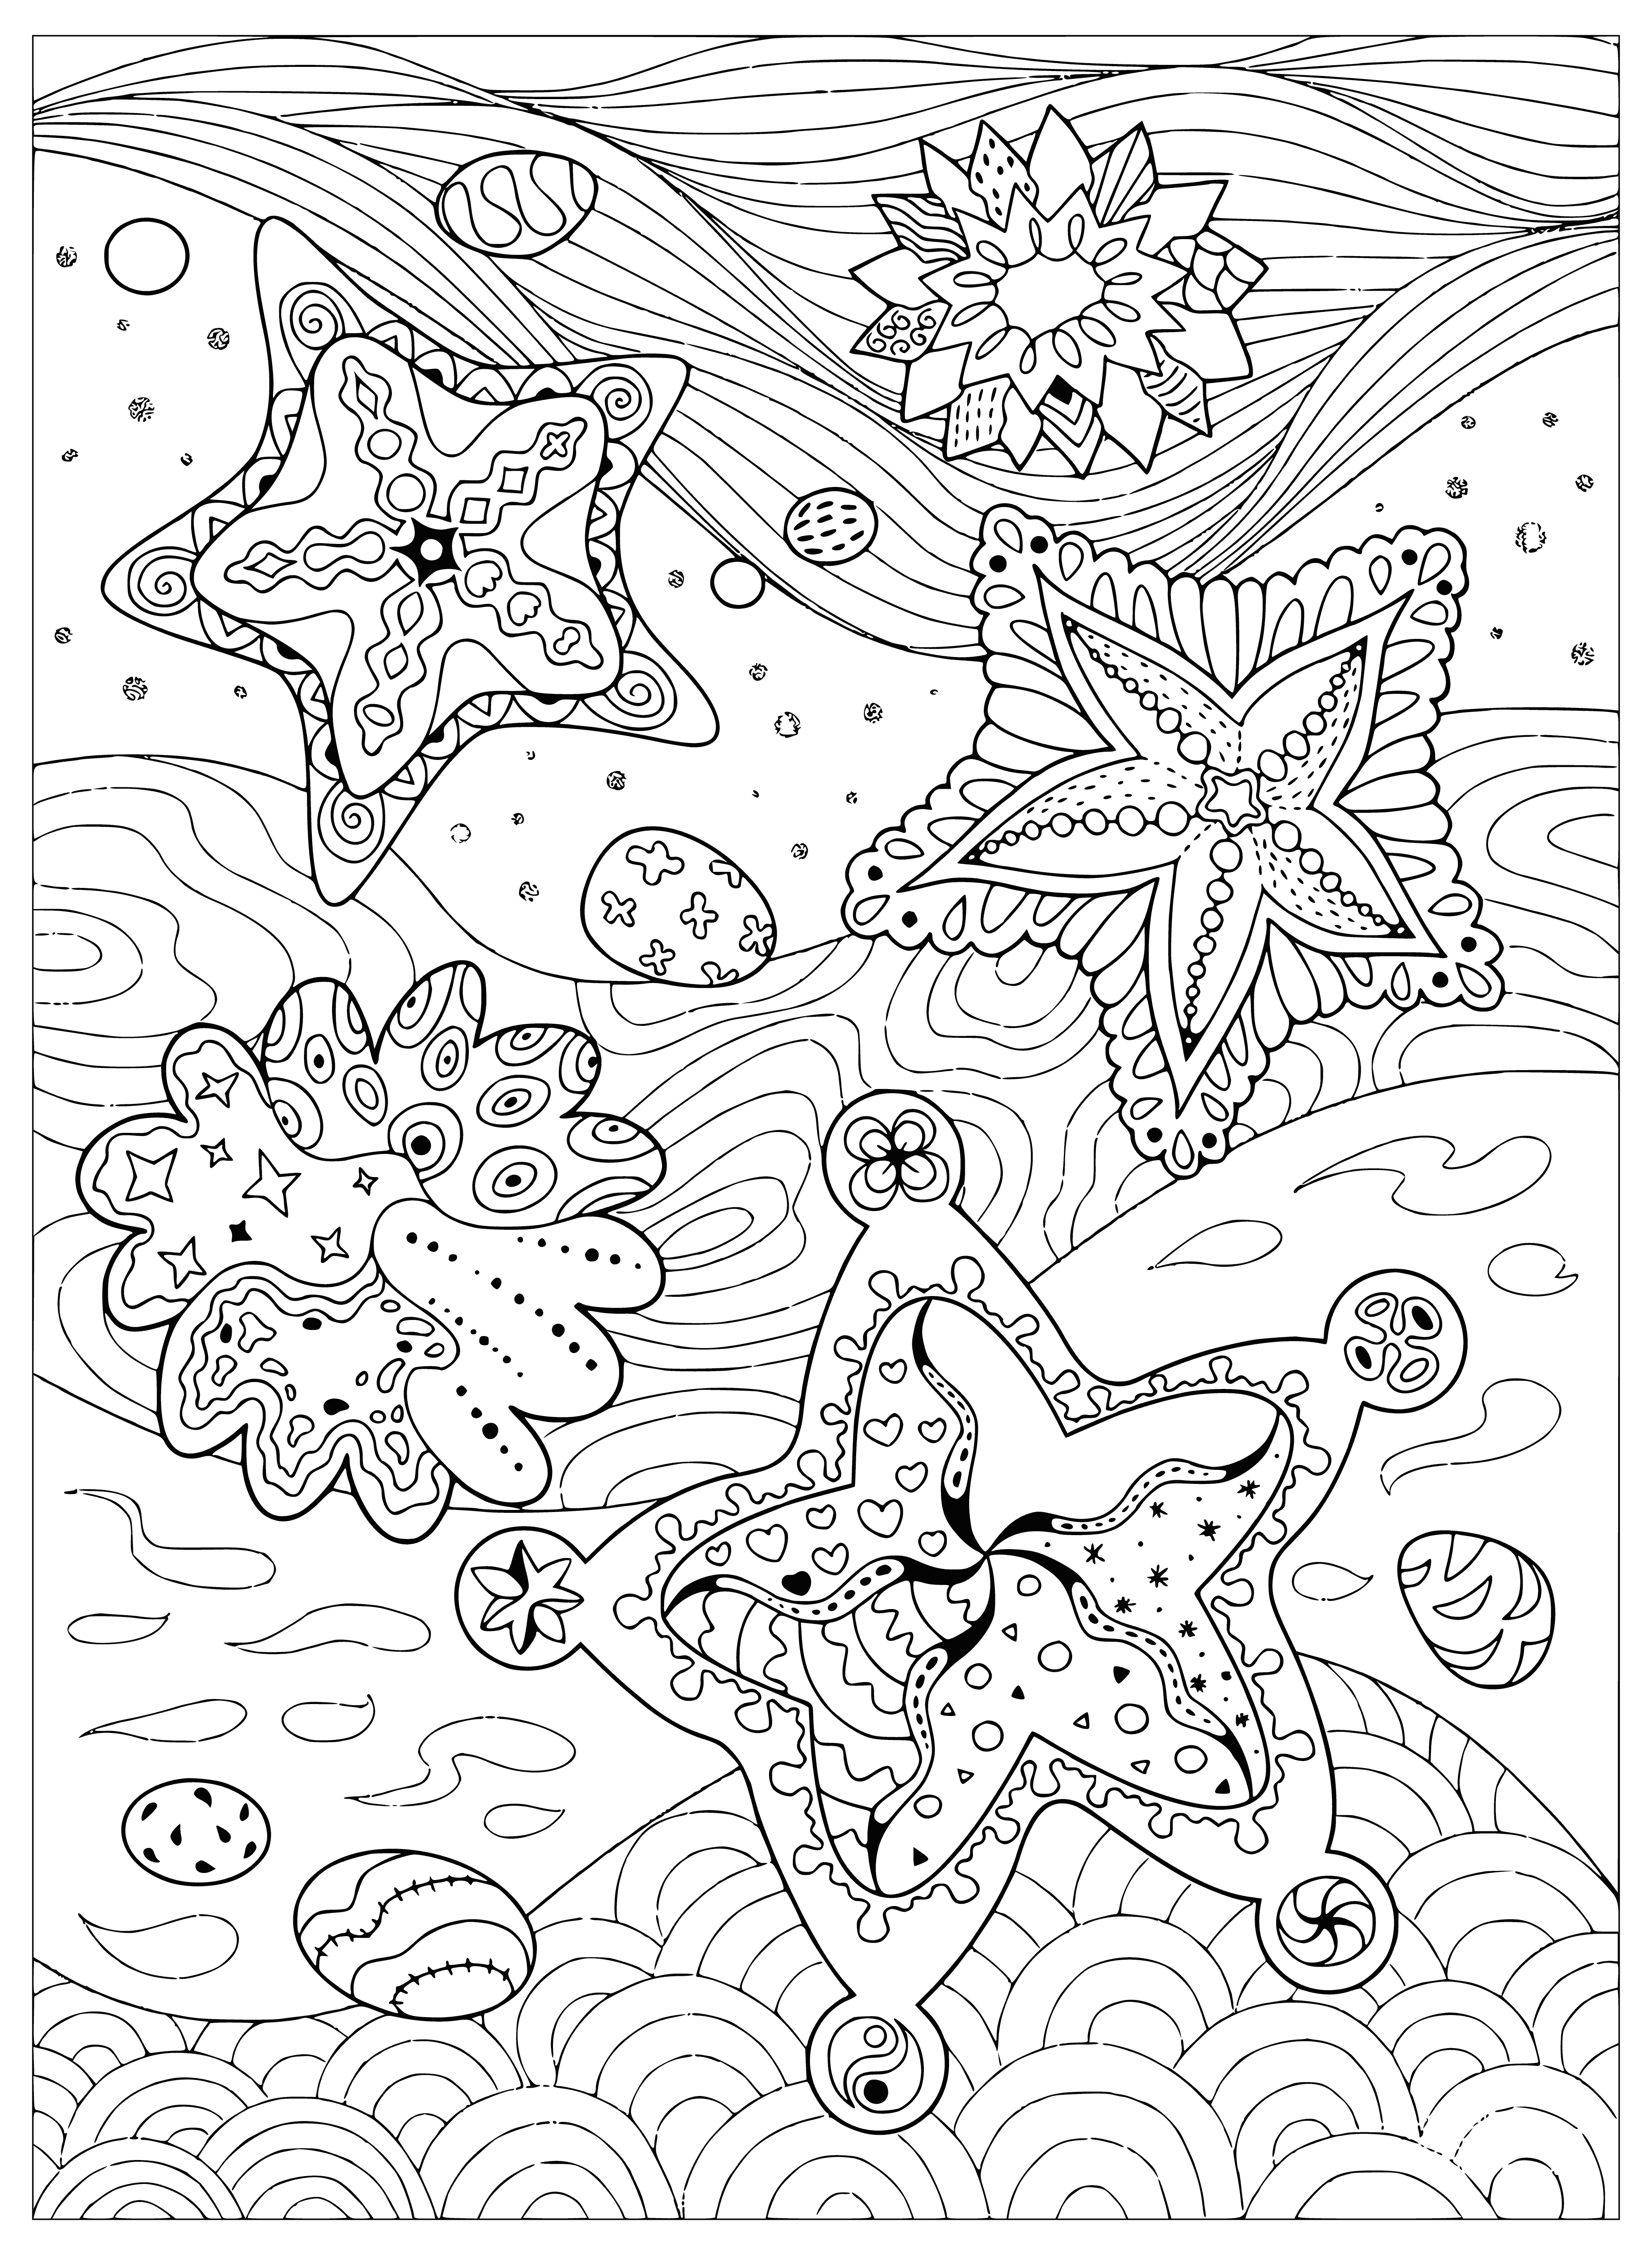 Sea stars coloring page